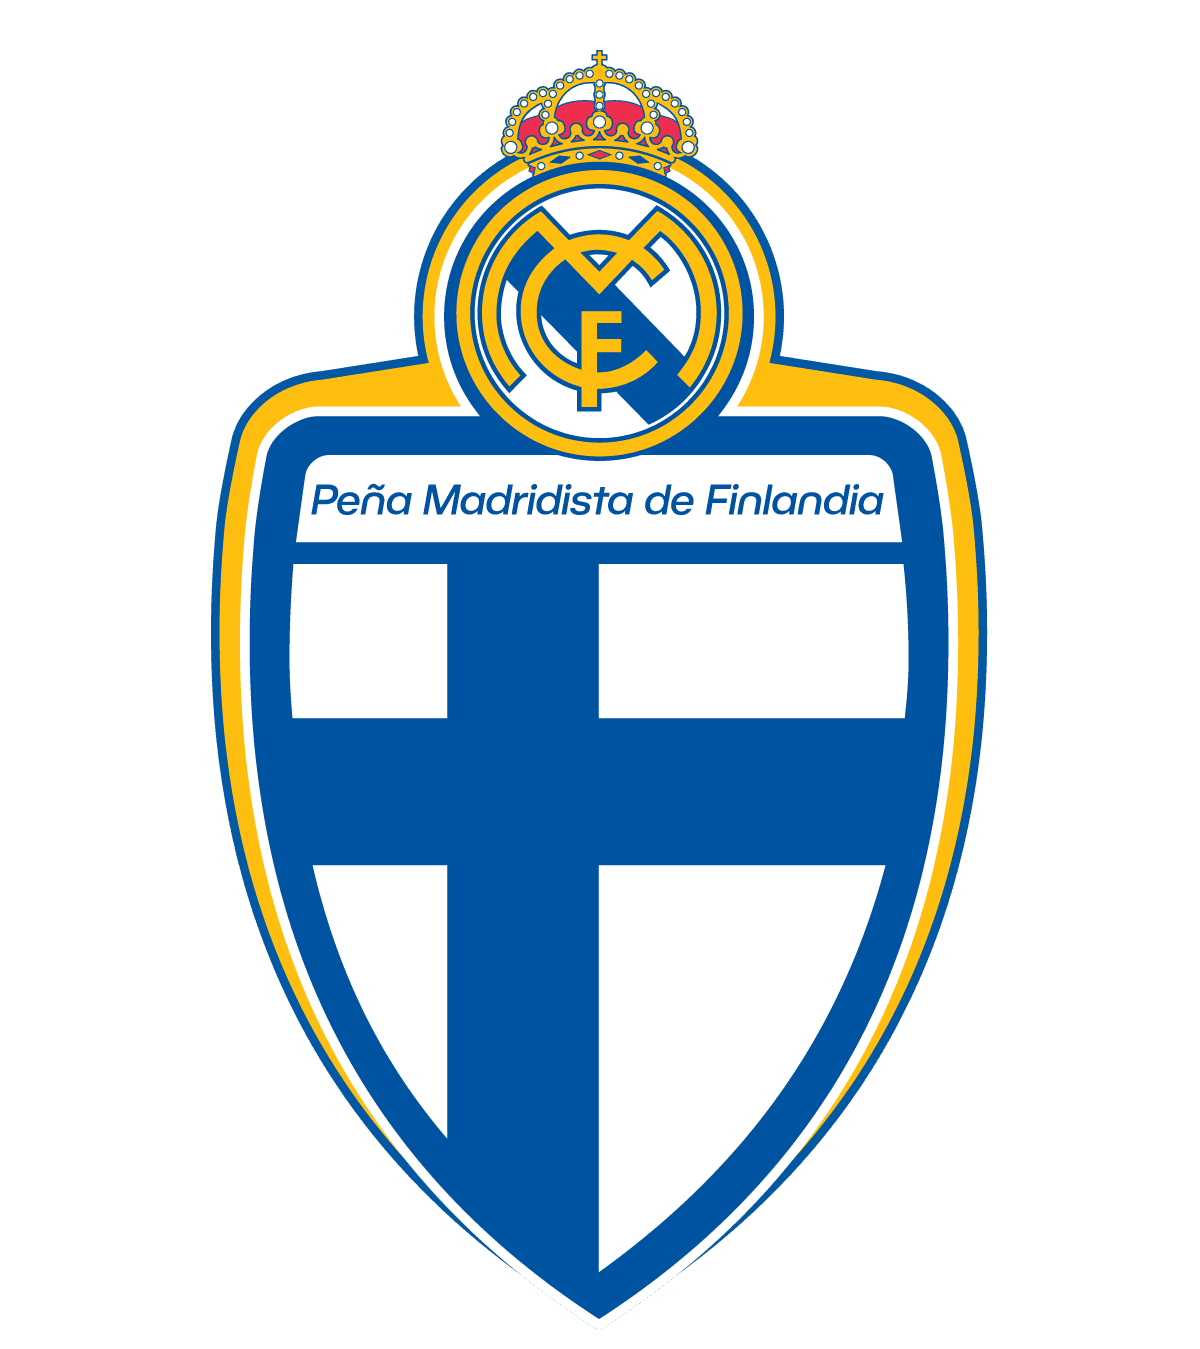 PENã MADRIDISTA DE FINLANDIA seuran logo